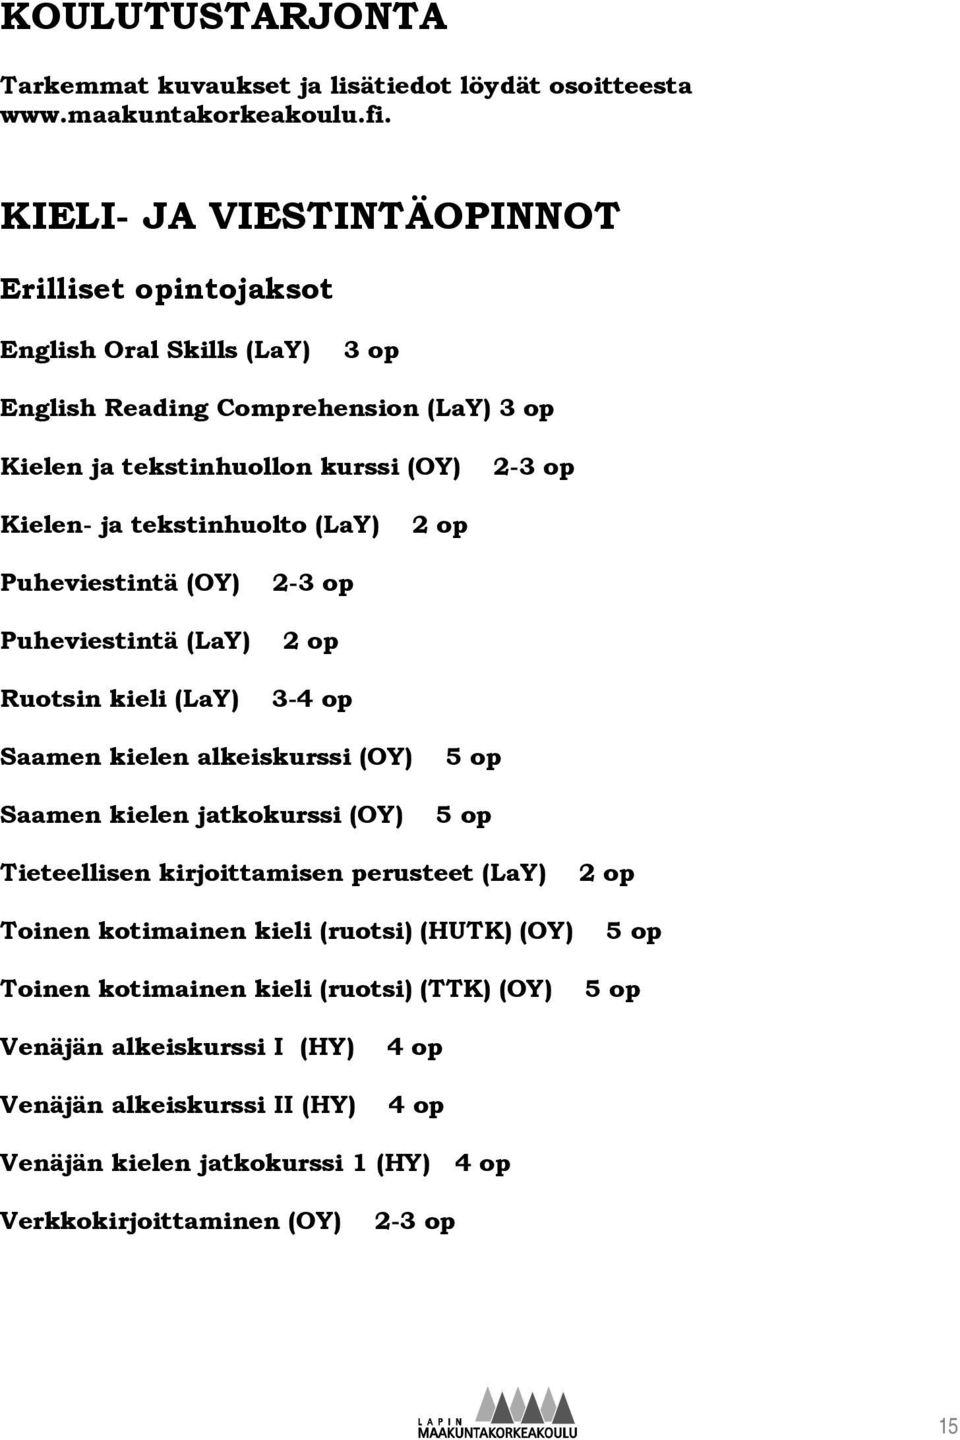 tekstinhuolto (LaY) 2 op Puheviestintä (OY) 2-3 op Puheviestintä (LaY) 2 op Ruotsin kieli (LaY) 3-4 op Saamen kielen alkeiskurssi (OY) 5 op Saamen kielen jatkokurssi (OY) 5 op